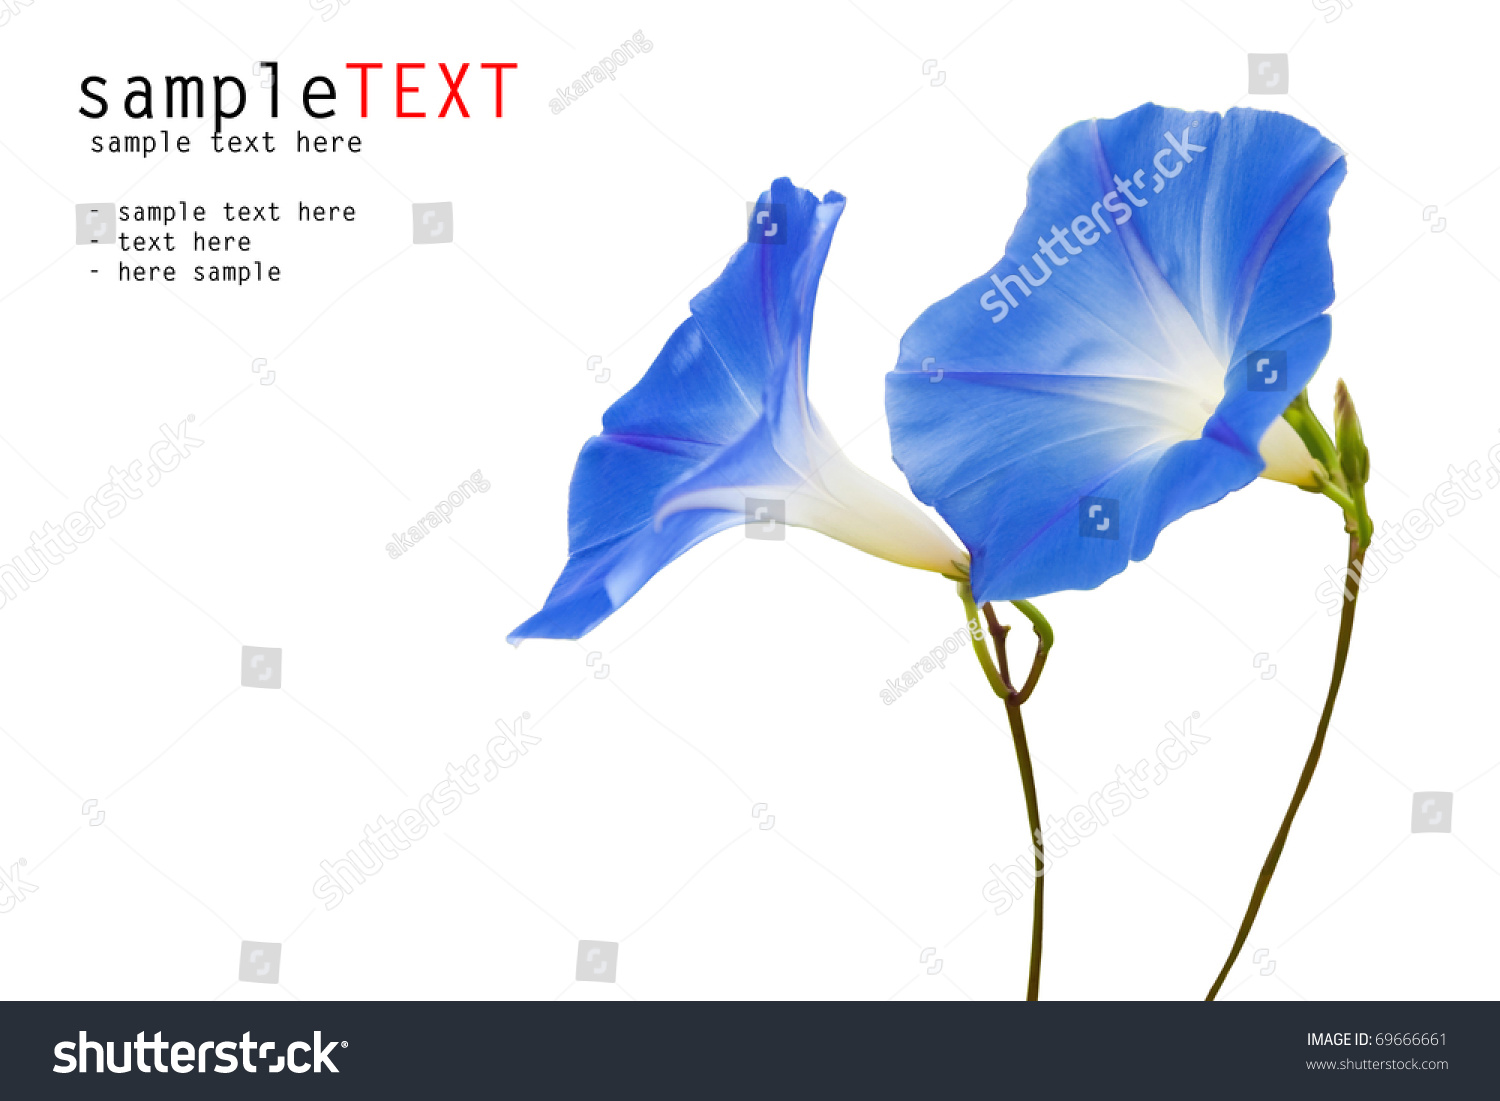 Blue Flower Isolated On White Background Stock Photo 69666661